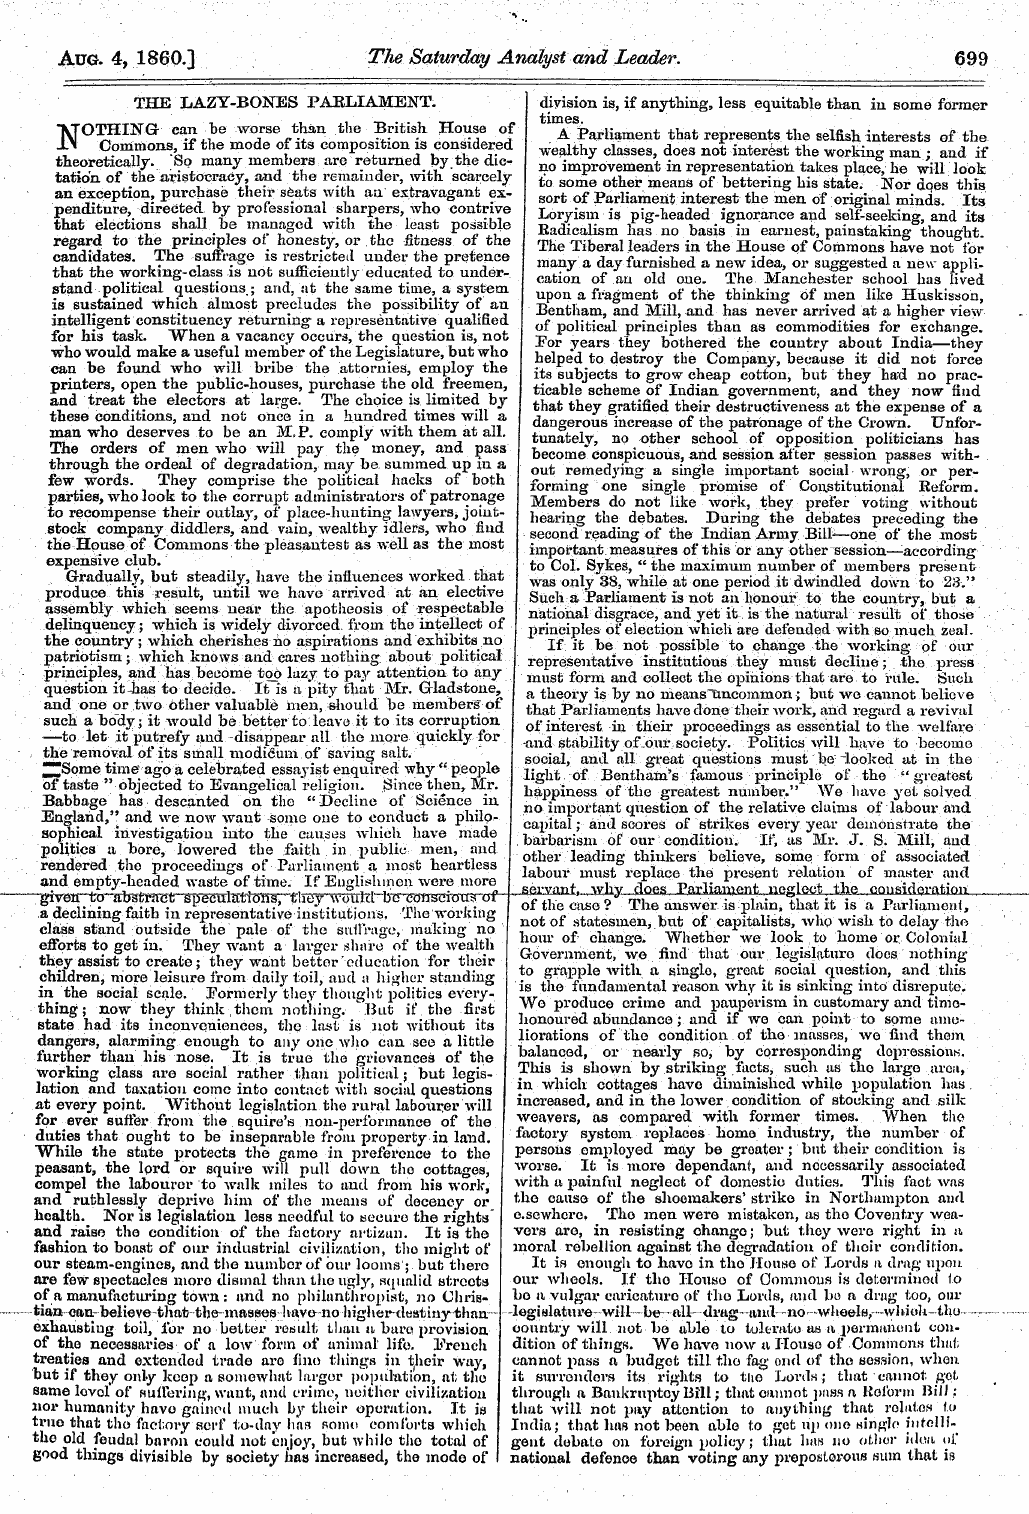 Leader (1850-1860): jS F Y, 1st edition - The Lazy-Bones Parliament.